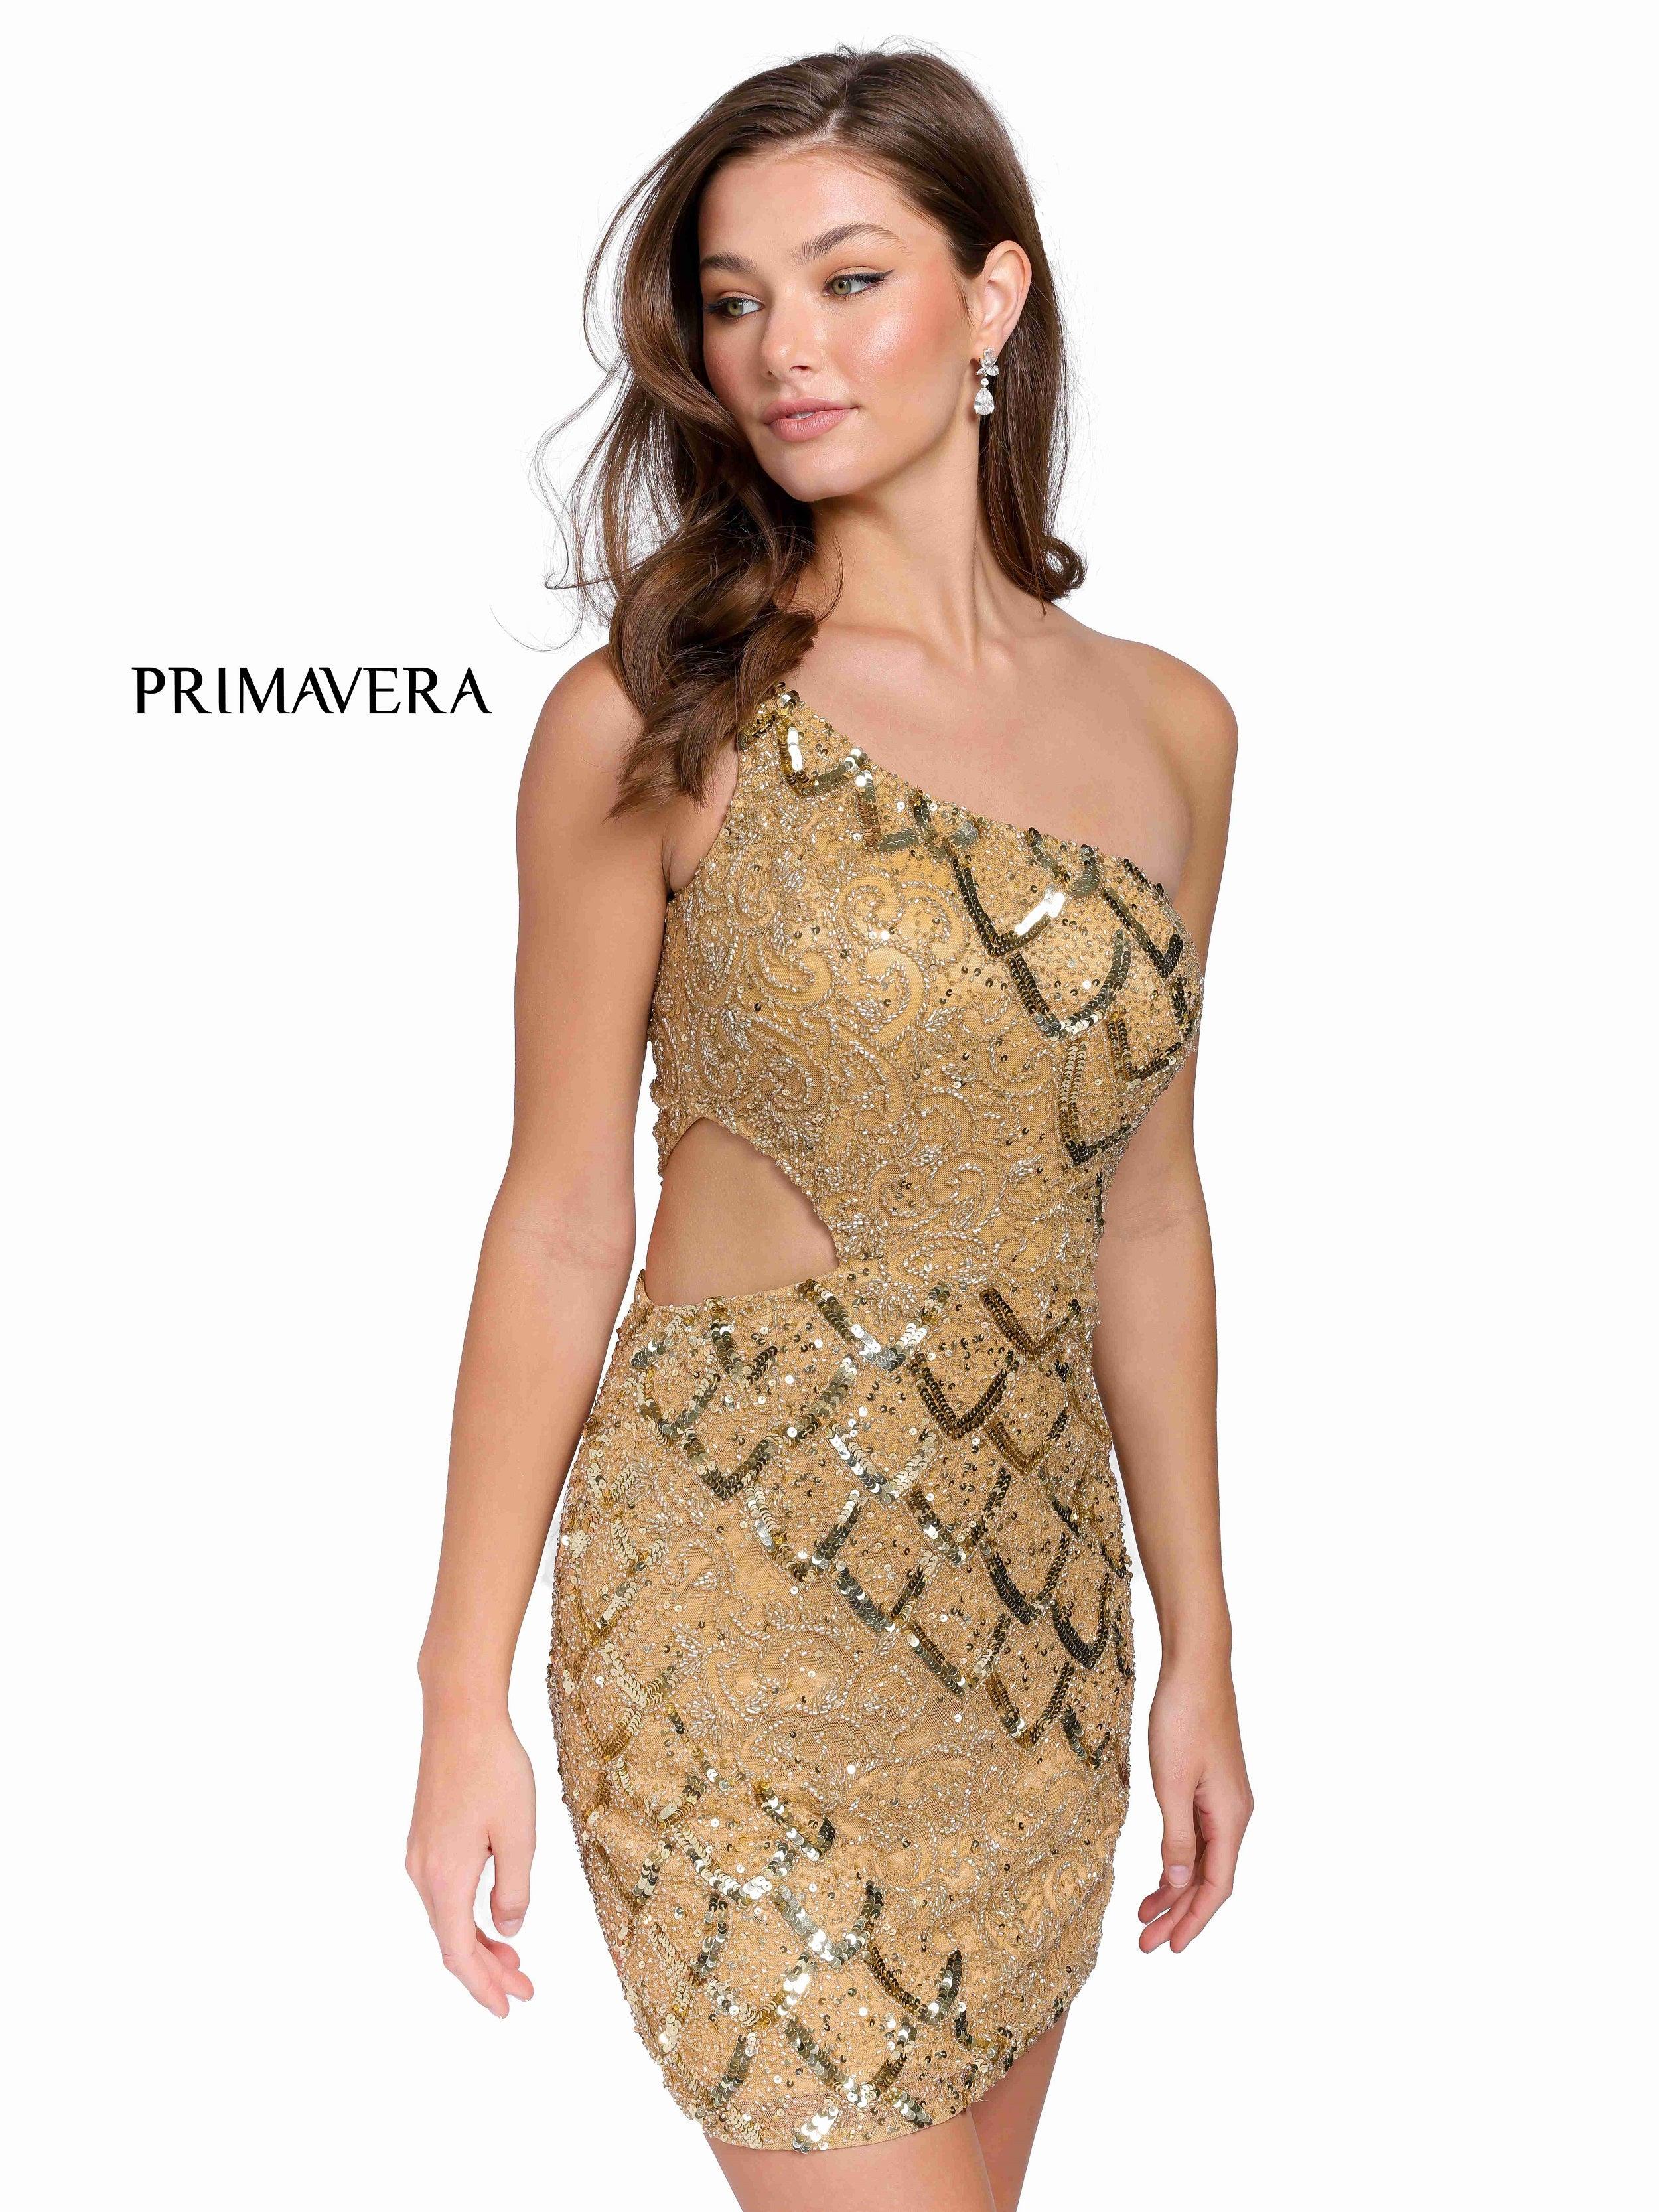 Primavera Couture One Shoulder Short Dress 3504 - The Dress Outlet